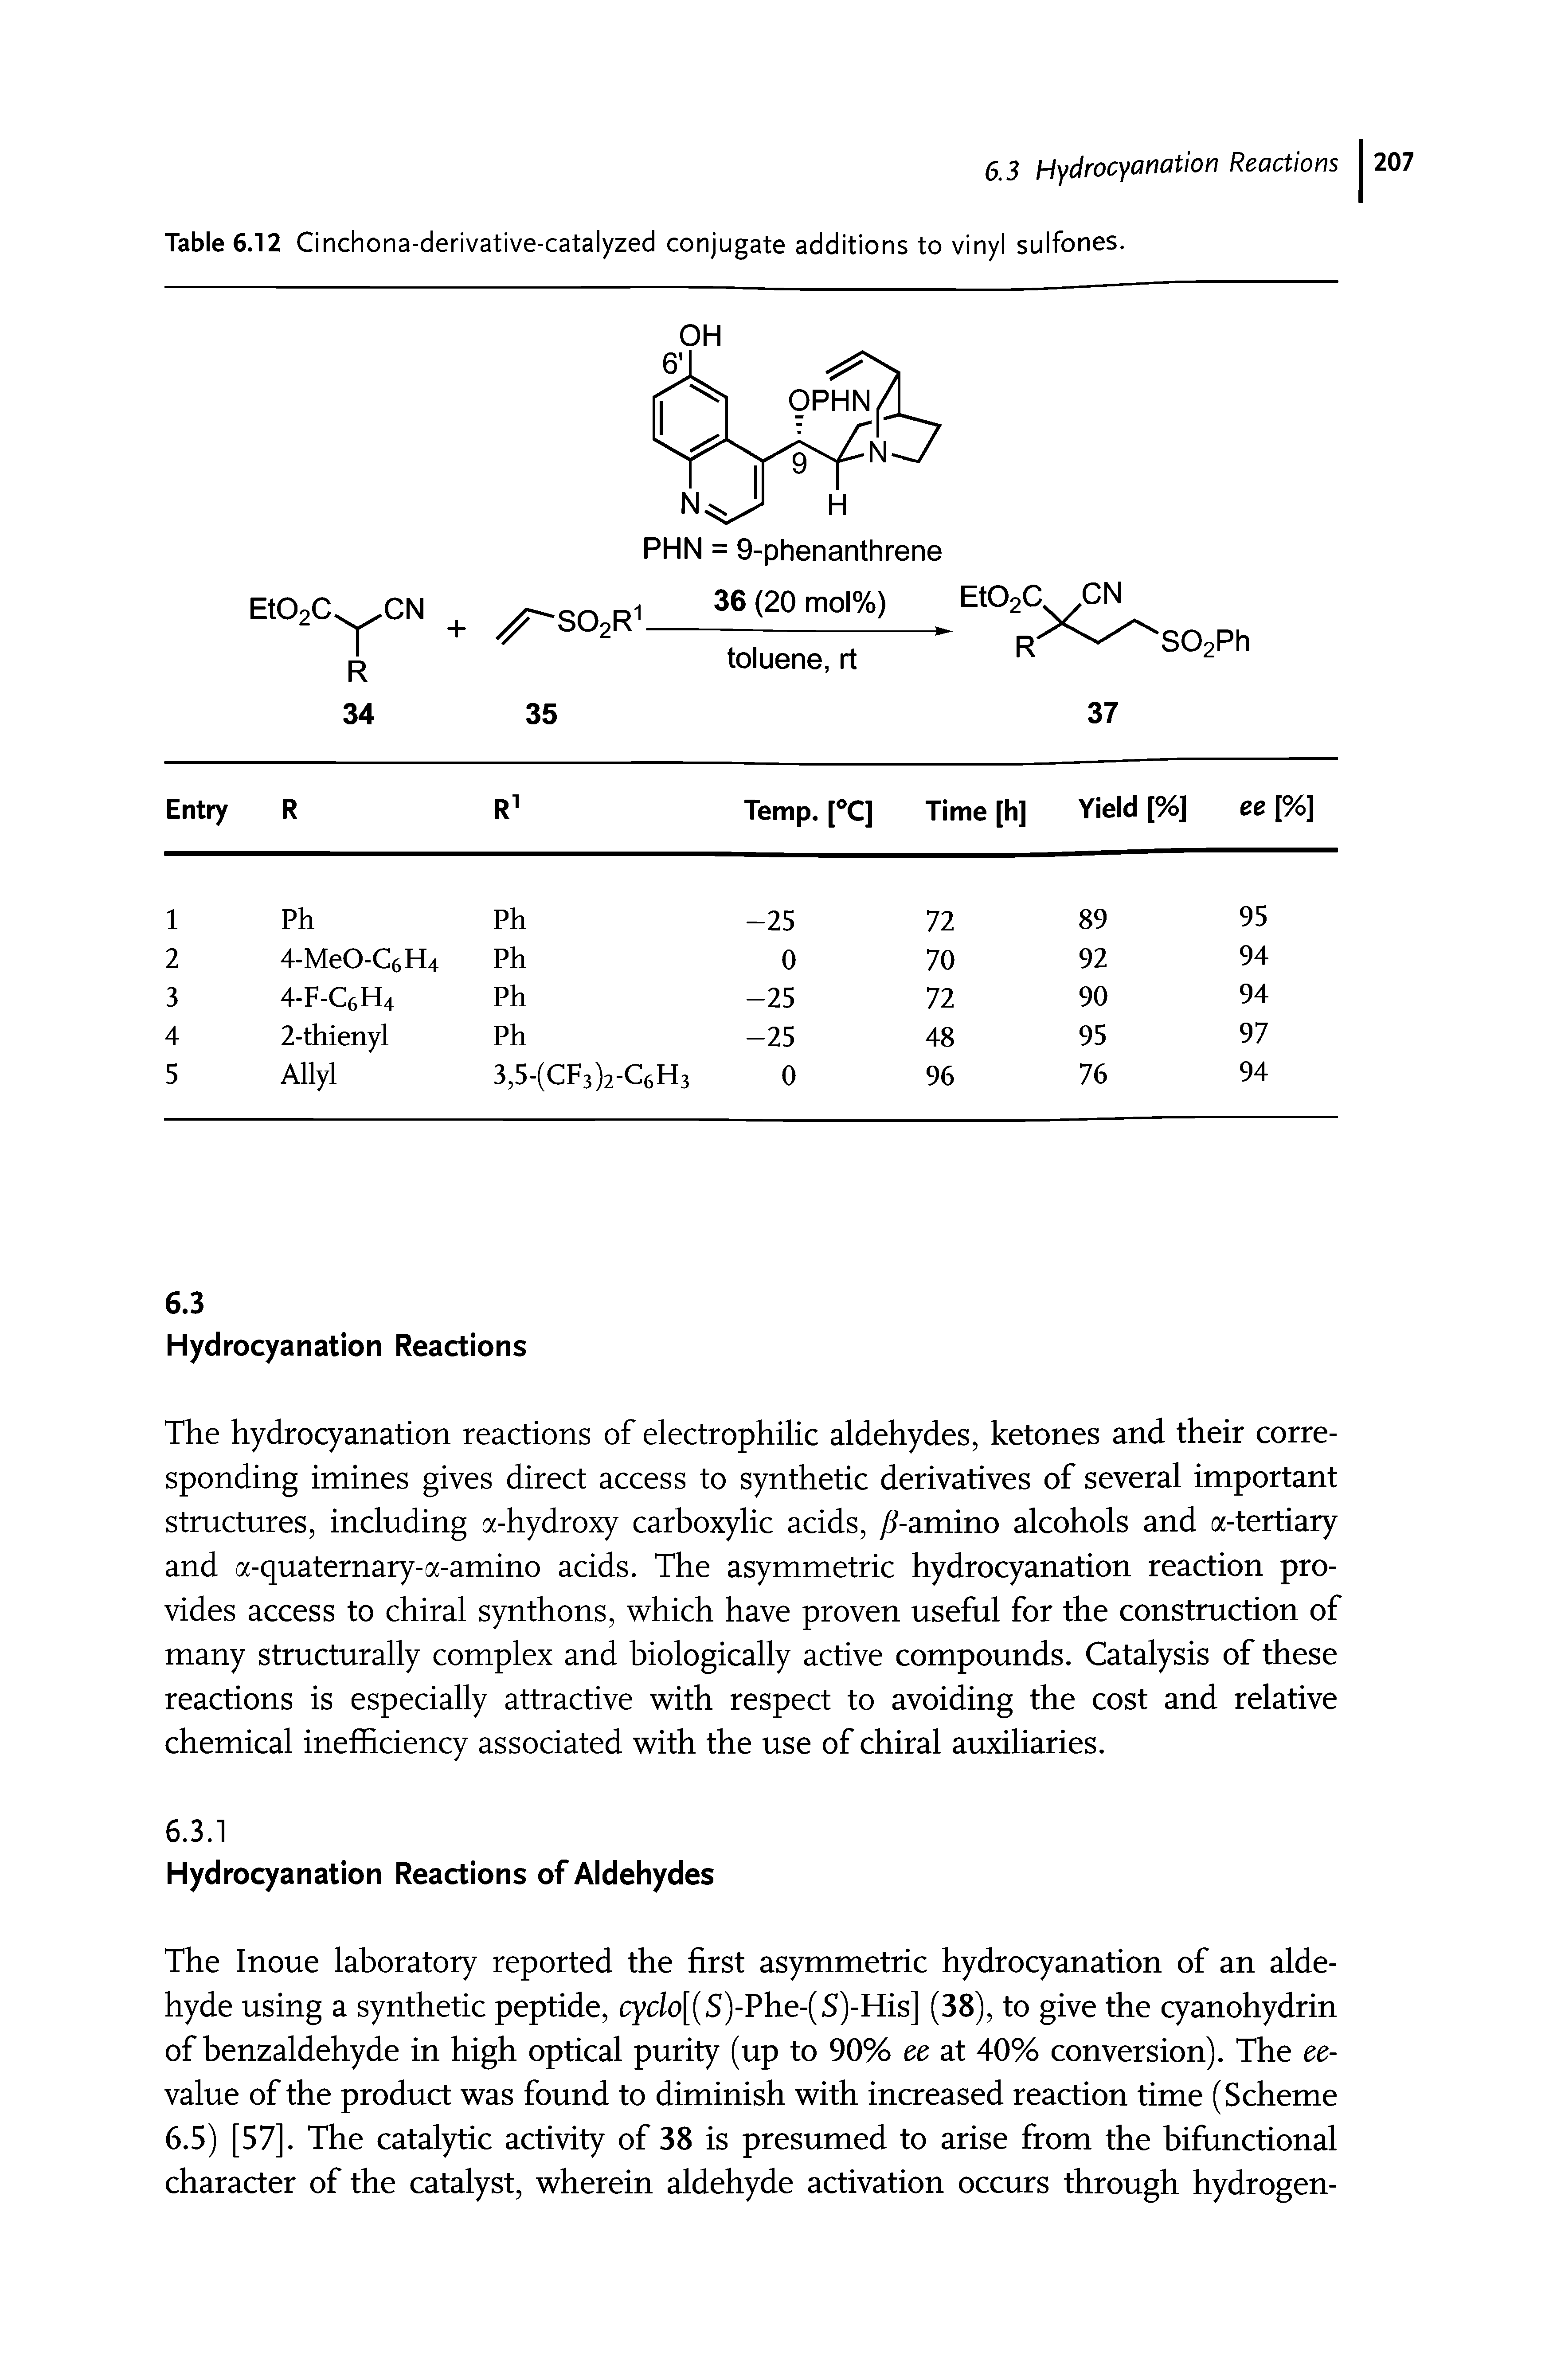 Table 6.12 Cinchona-derivative-catalyzed conjugate additions to vinyl sulfones.